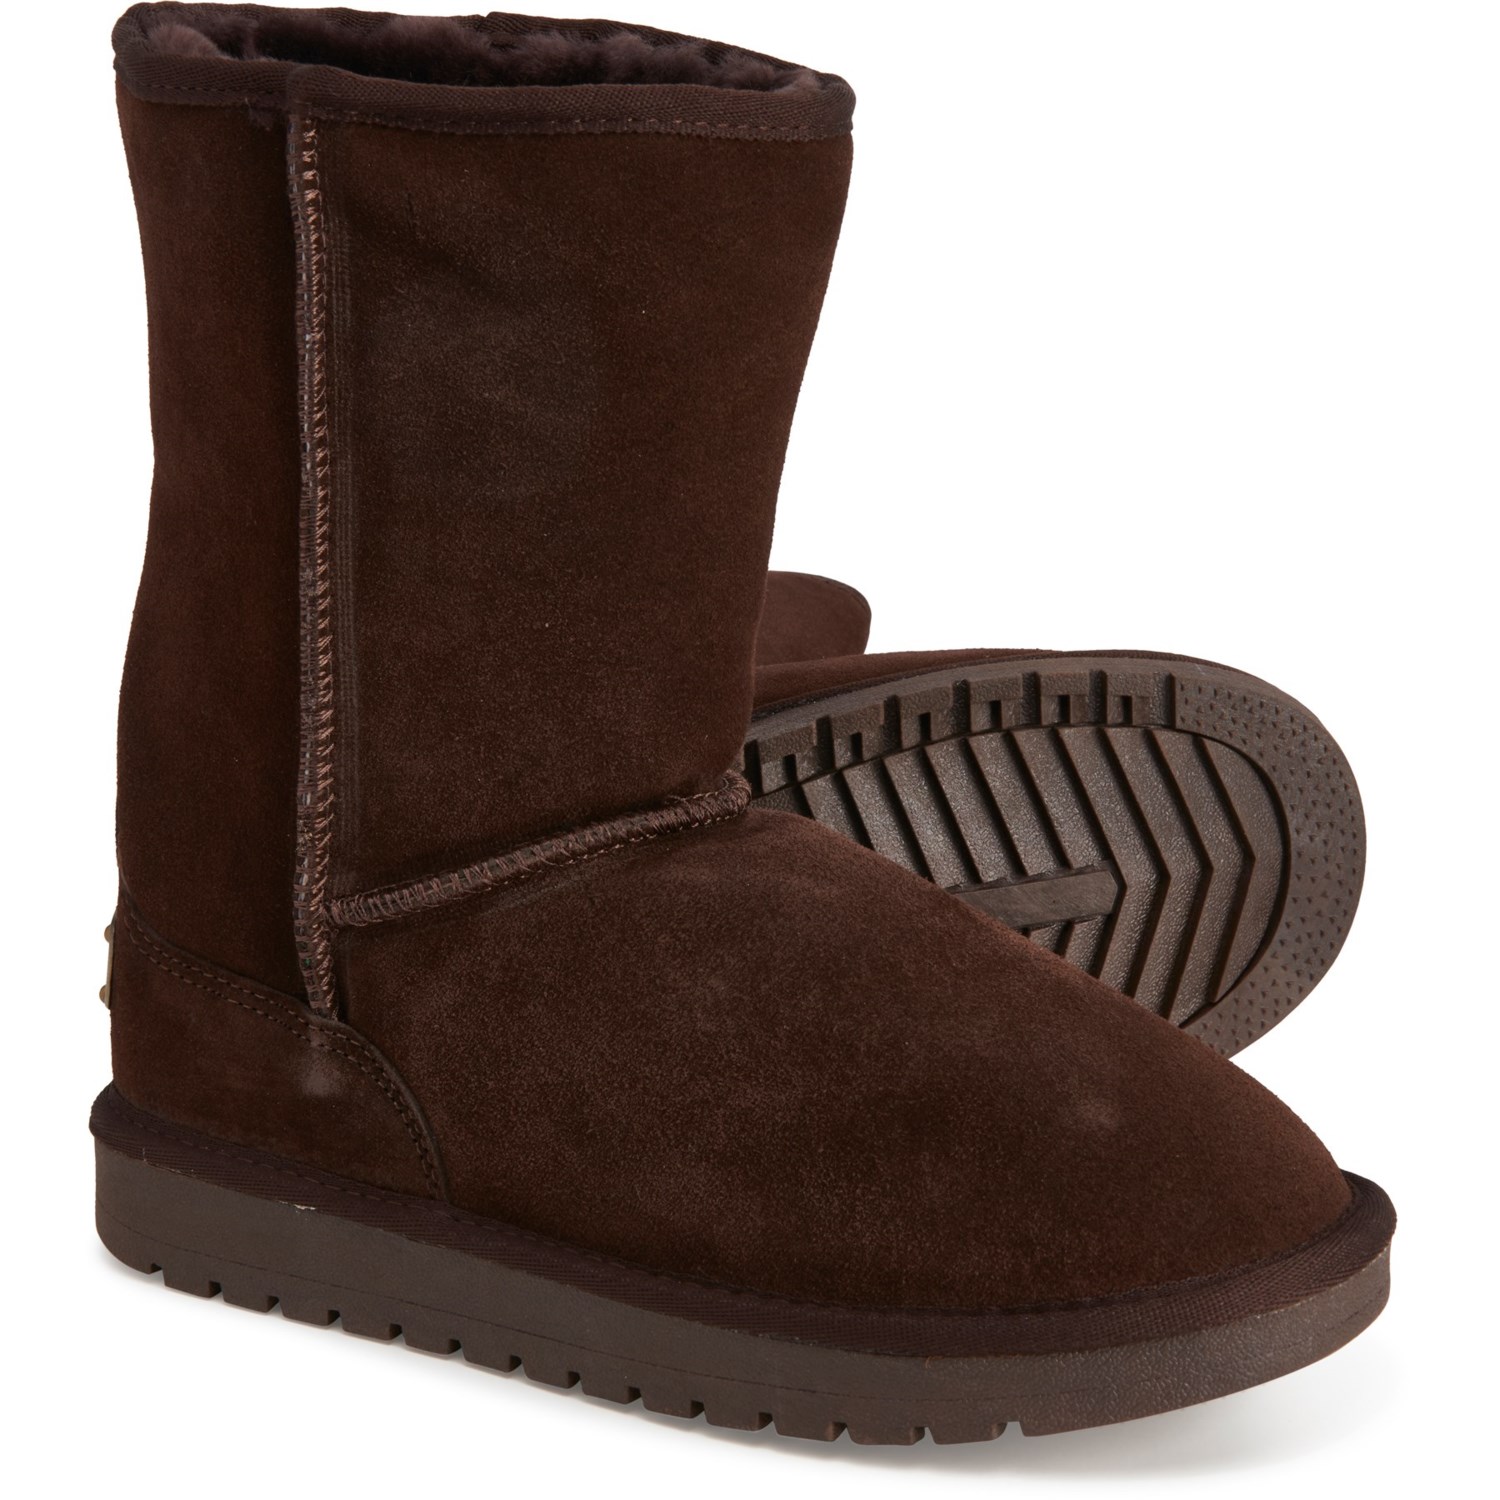 RJ FUZZIES Sheepskin Boots (For Women) - Save 50%